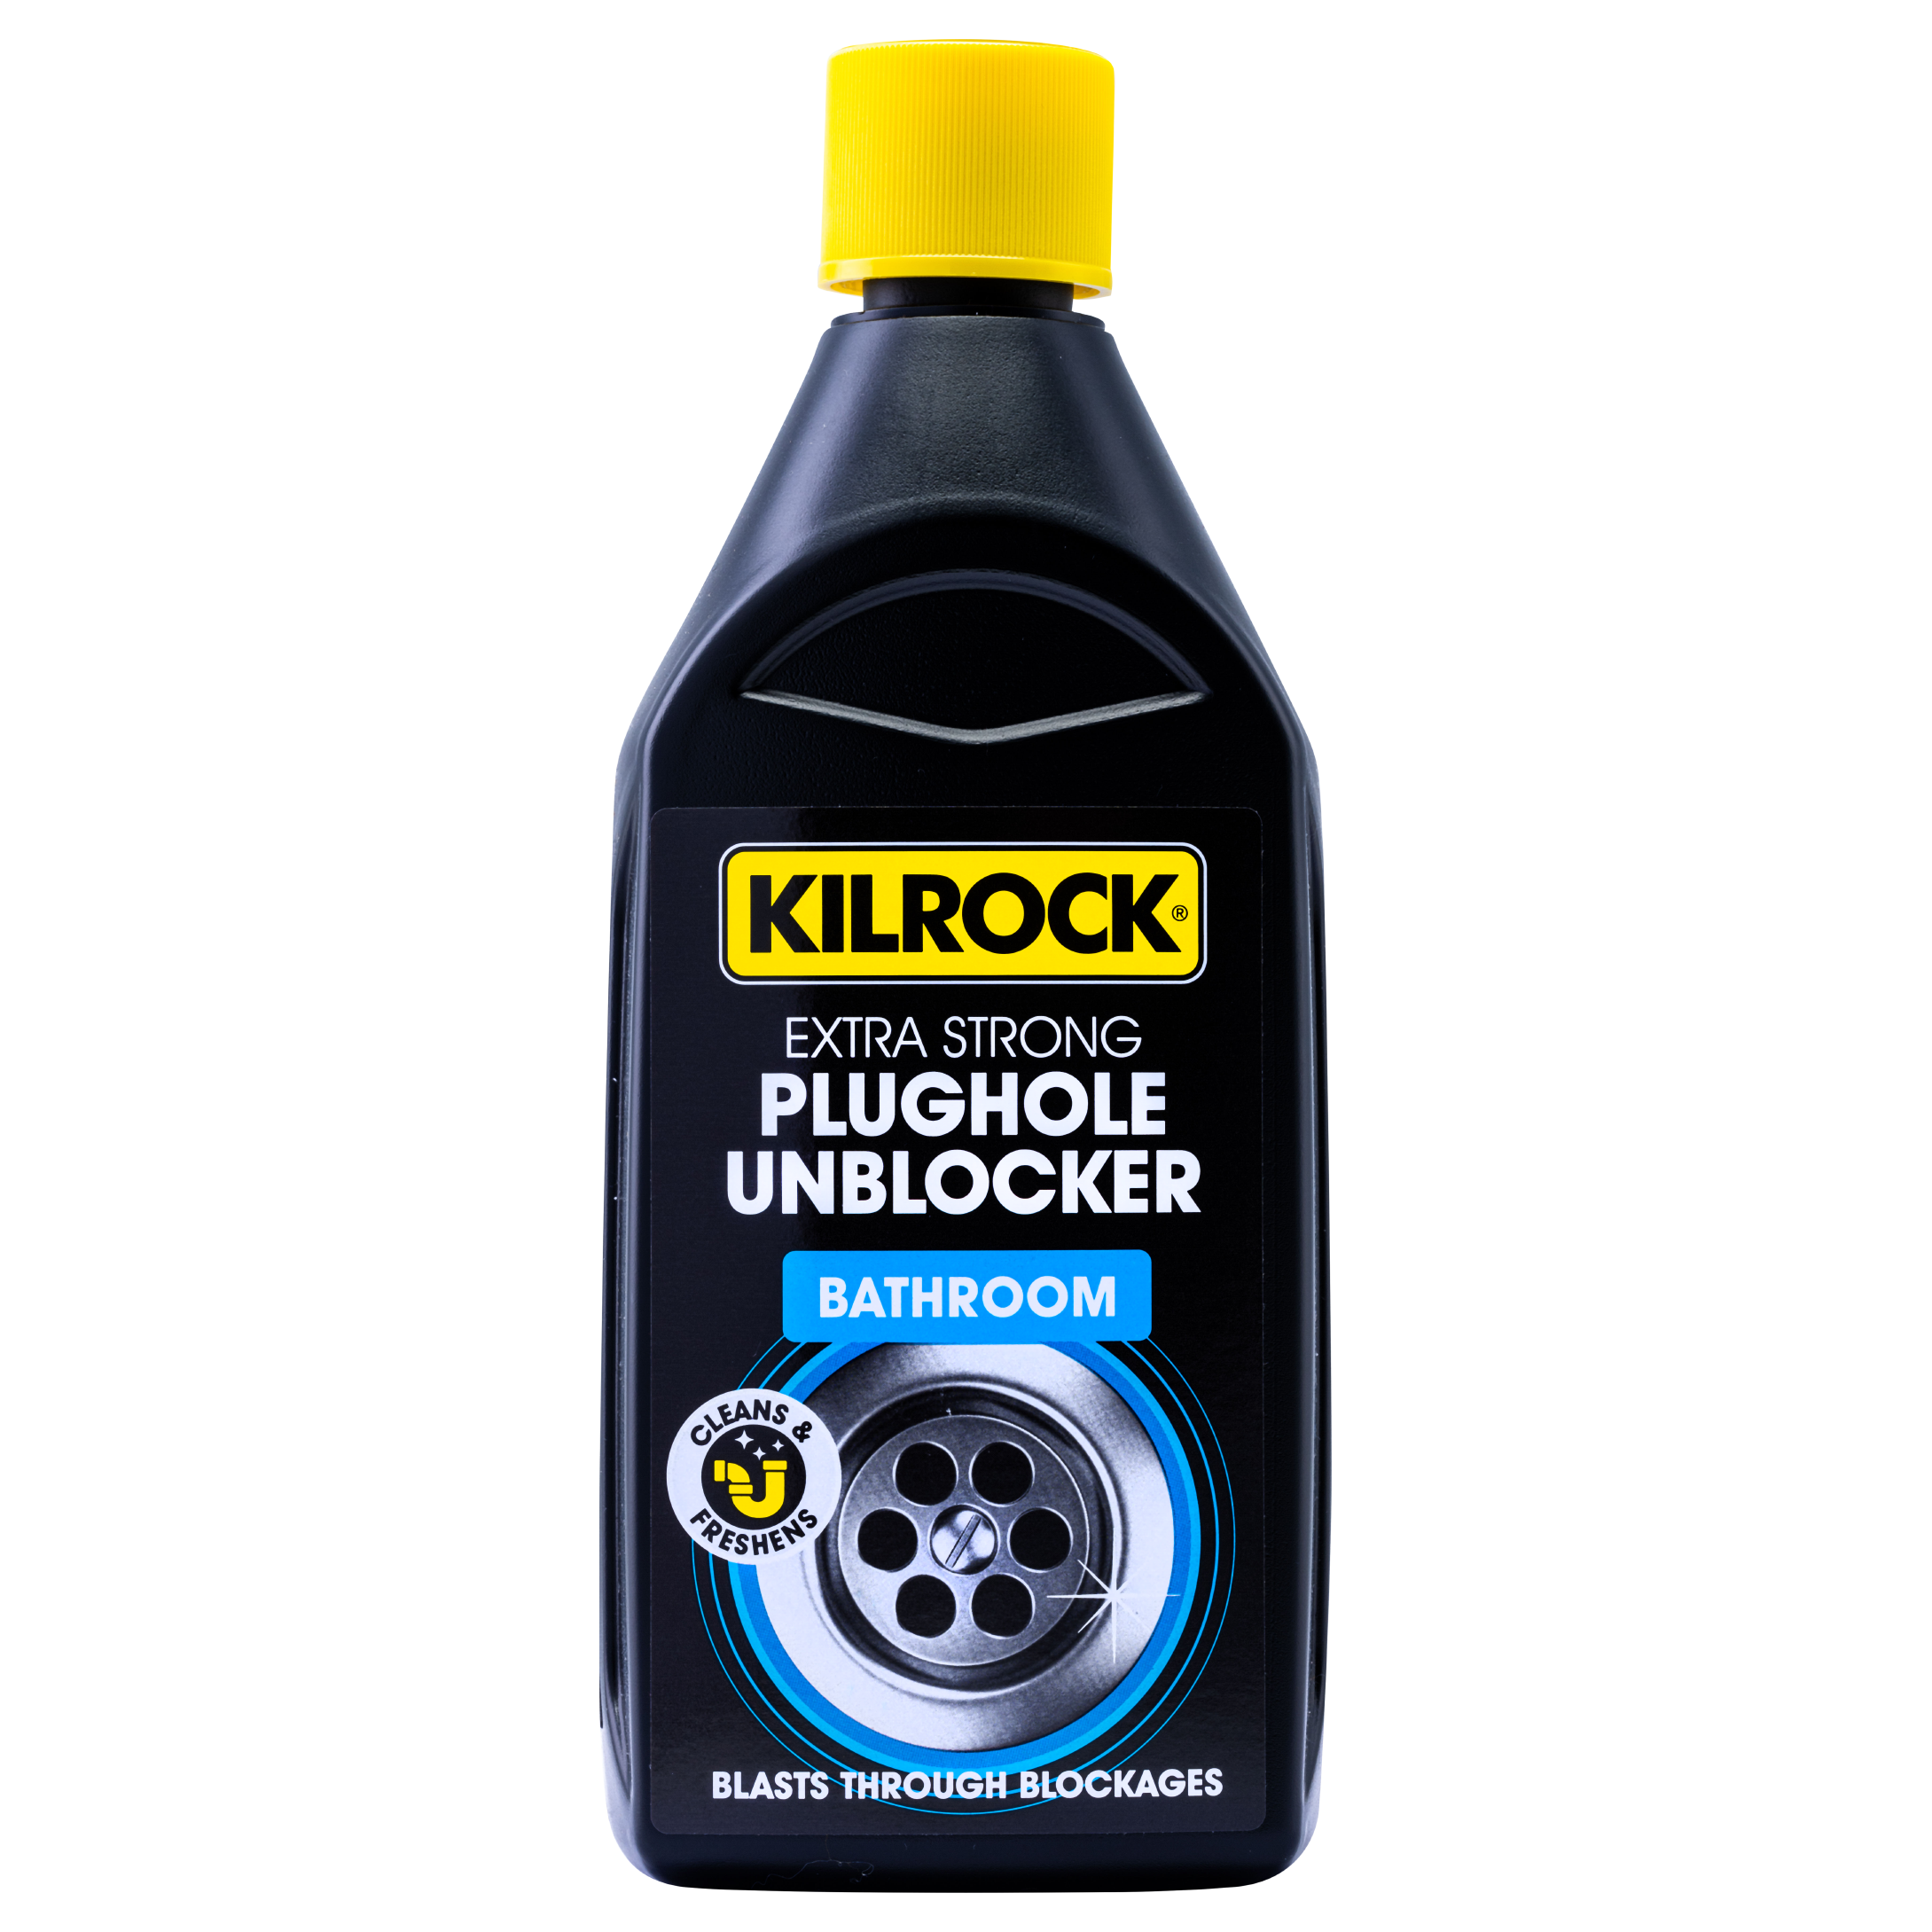 Kilrock Plughole Unblocker Bathroom-1.png